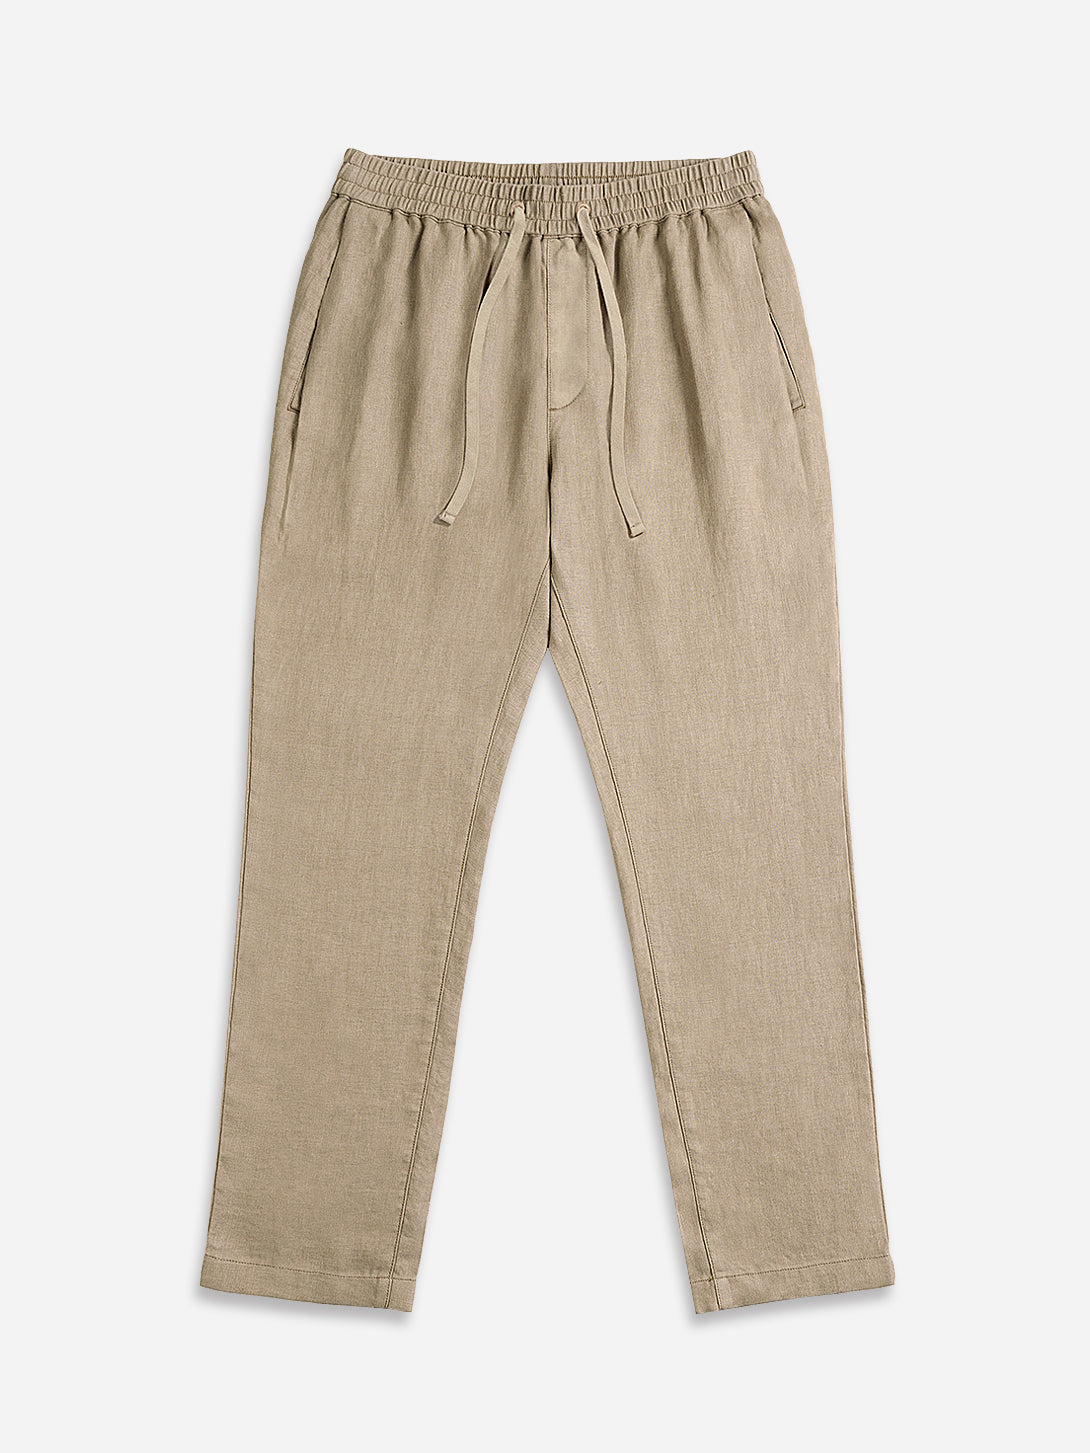 Khaki Ward Linen Pants Mens ONS Sumer Linen Drawstring Trouser Pockets 100% Linen